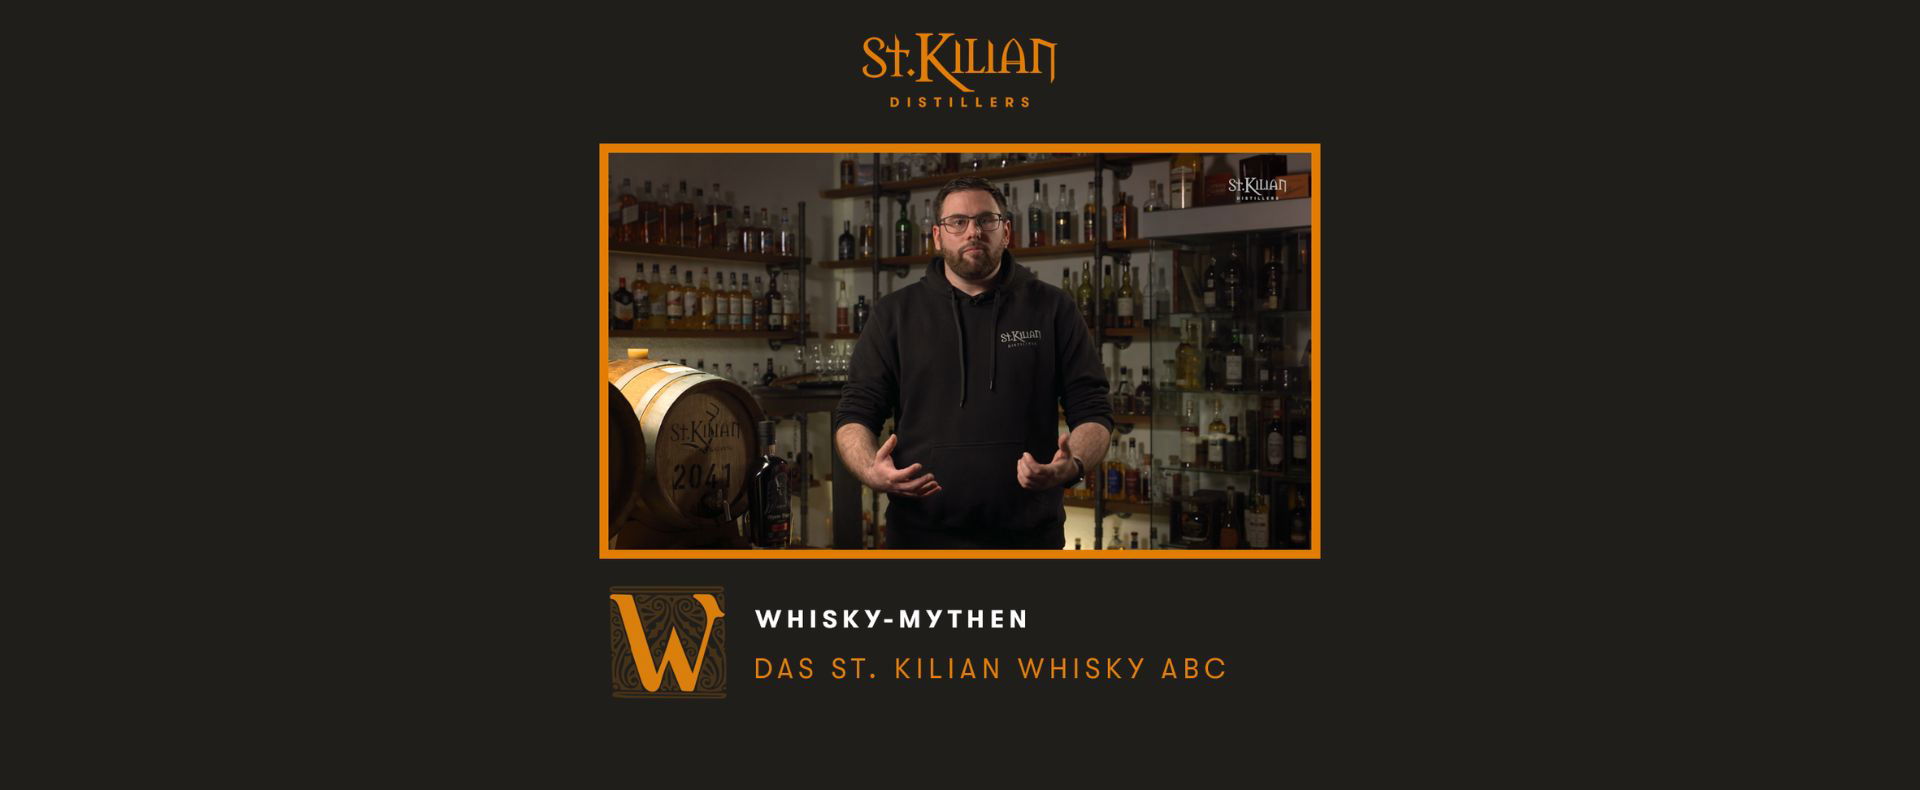 Whisky ABC - W wie Whisky Mythen